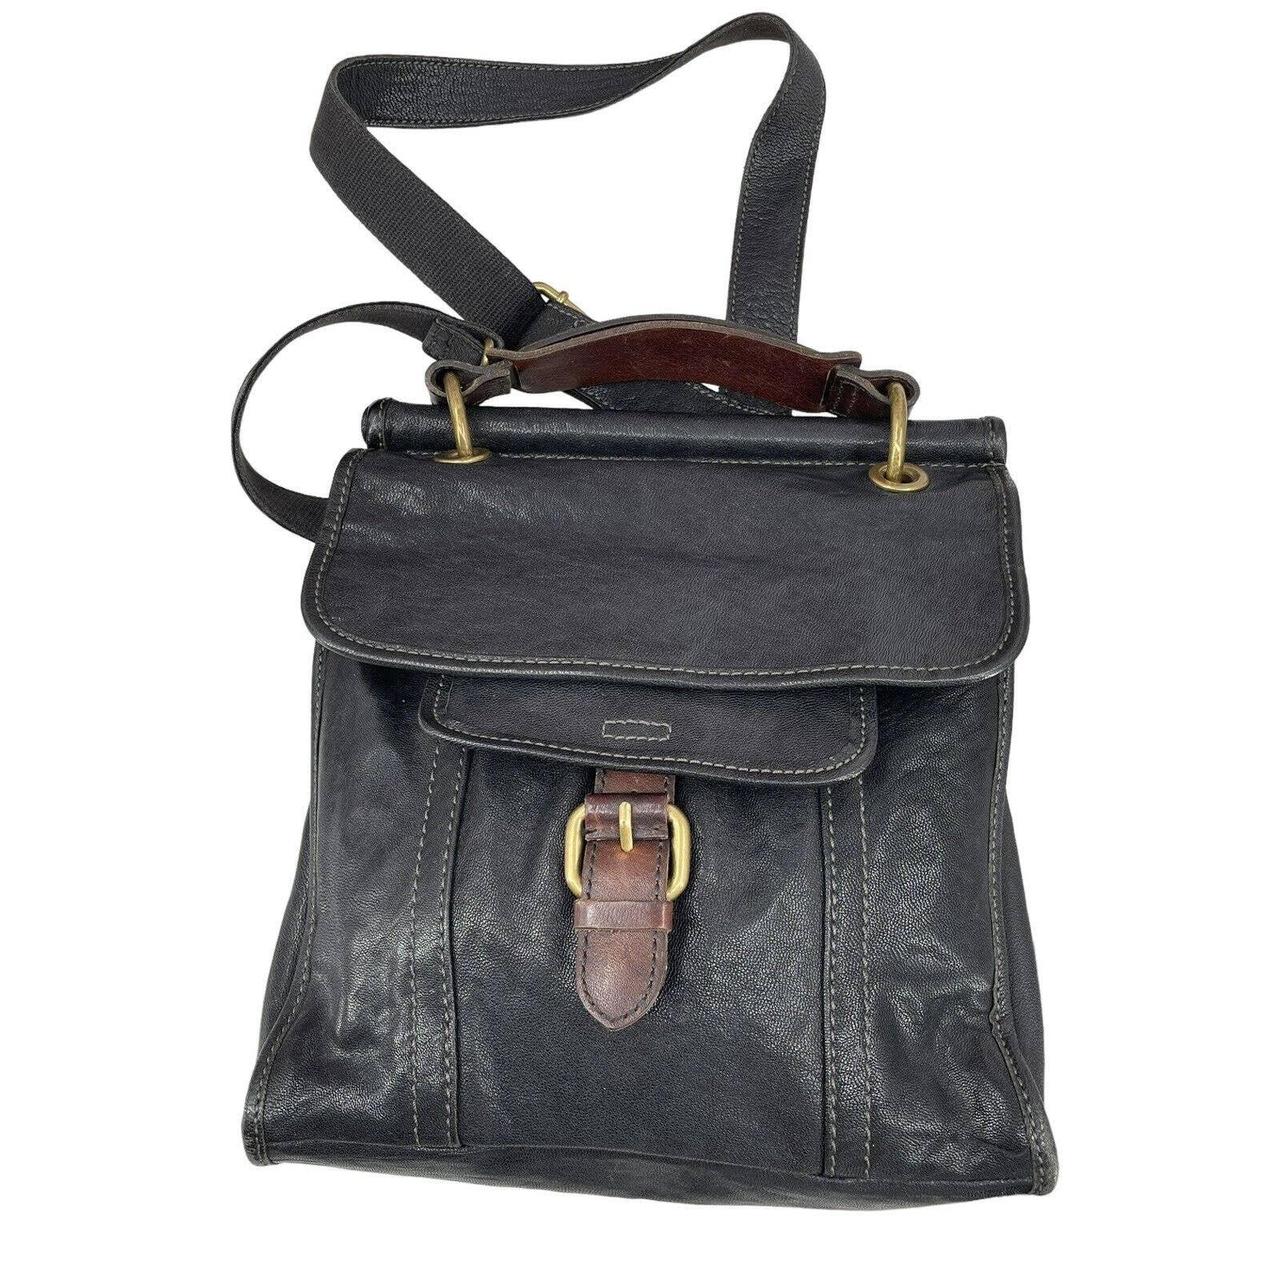 Fossil sale purchase : r/handbags